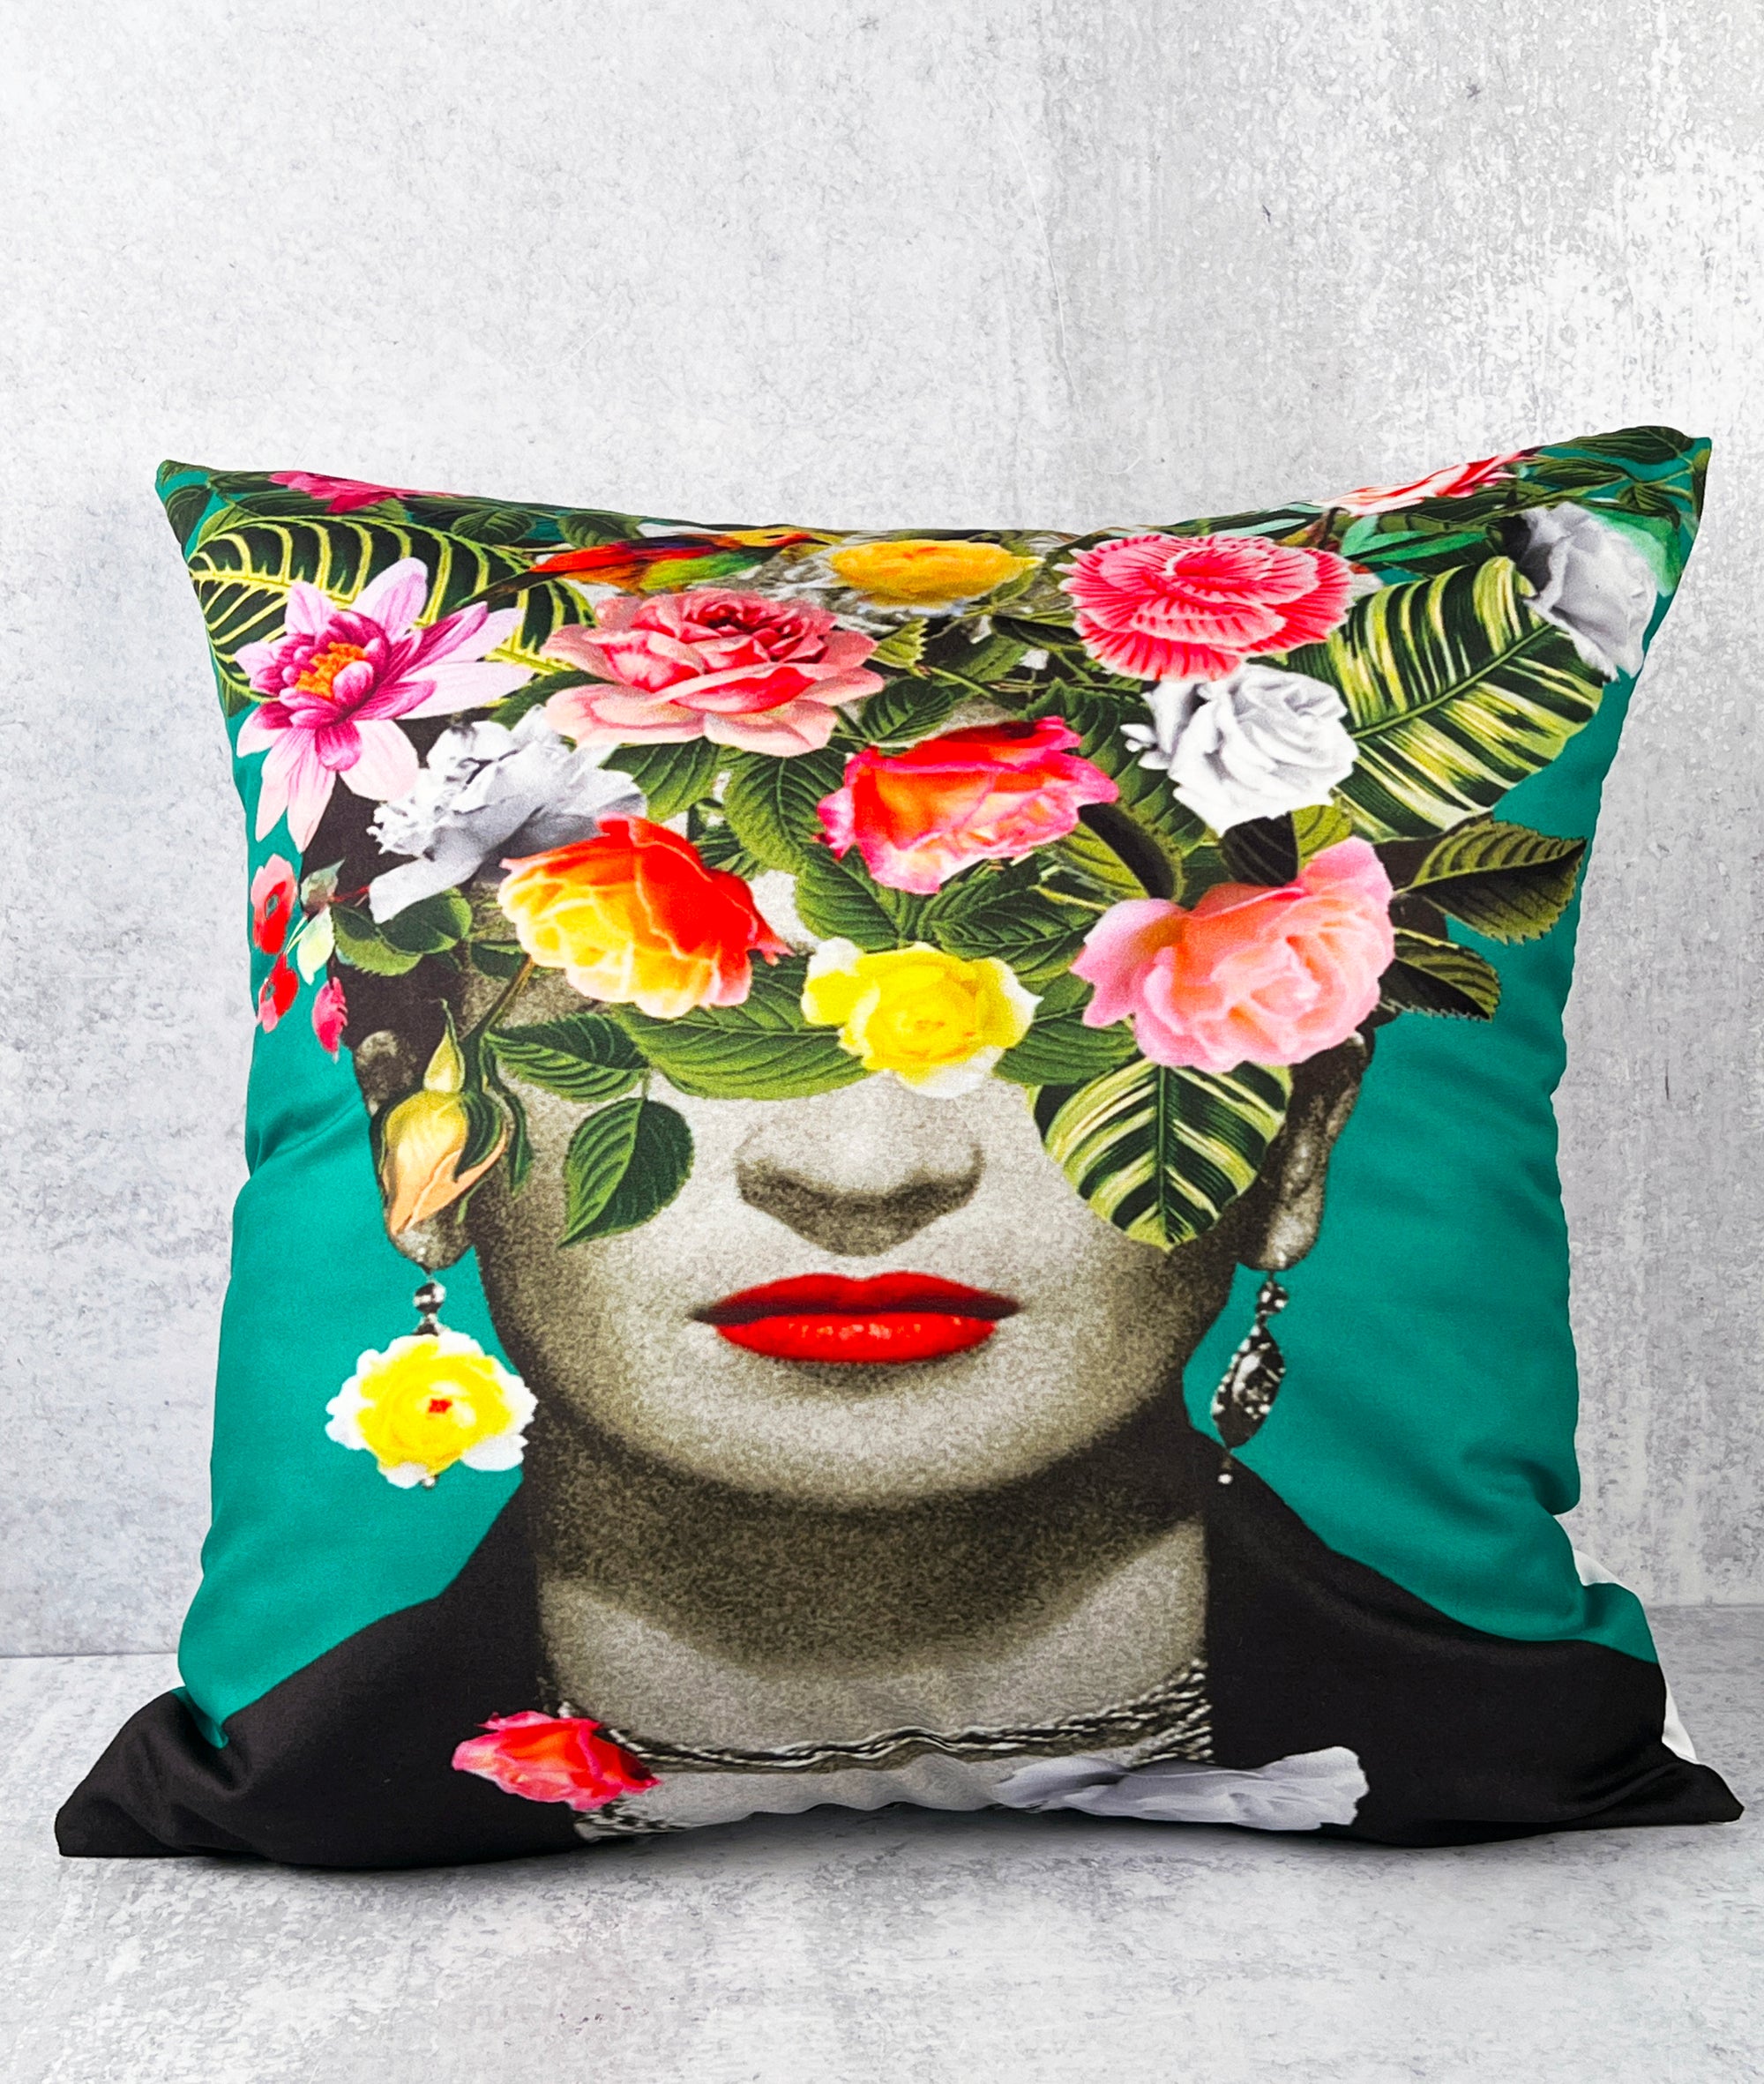 Frida Kahlo Altered Image Pillow Case